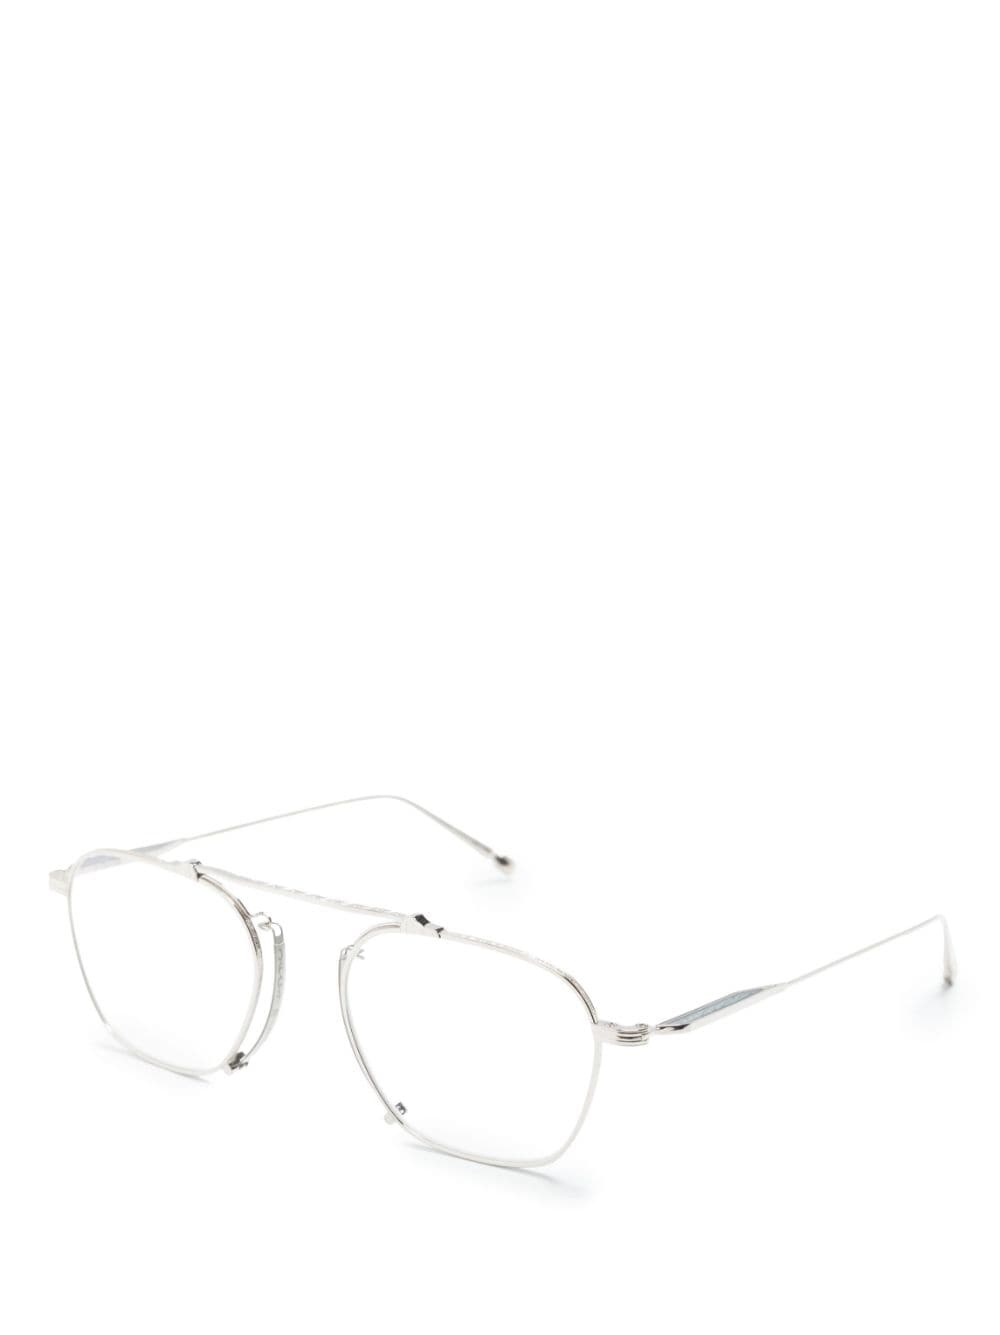 pilot-frame optical glasses - 2